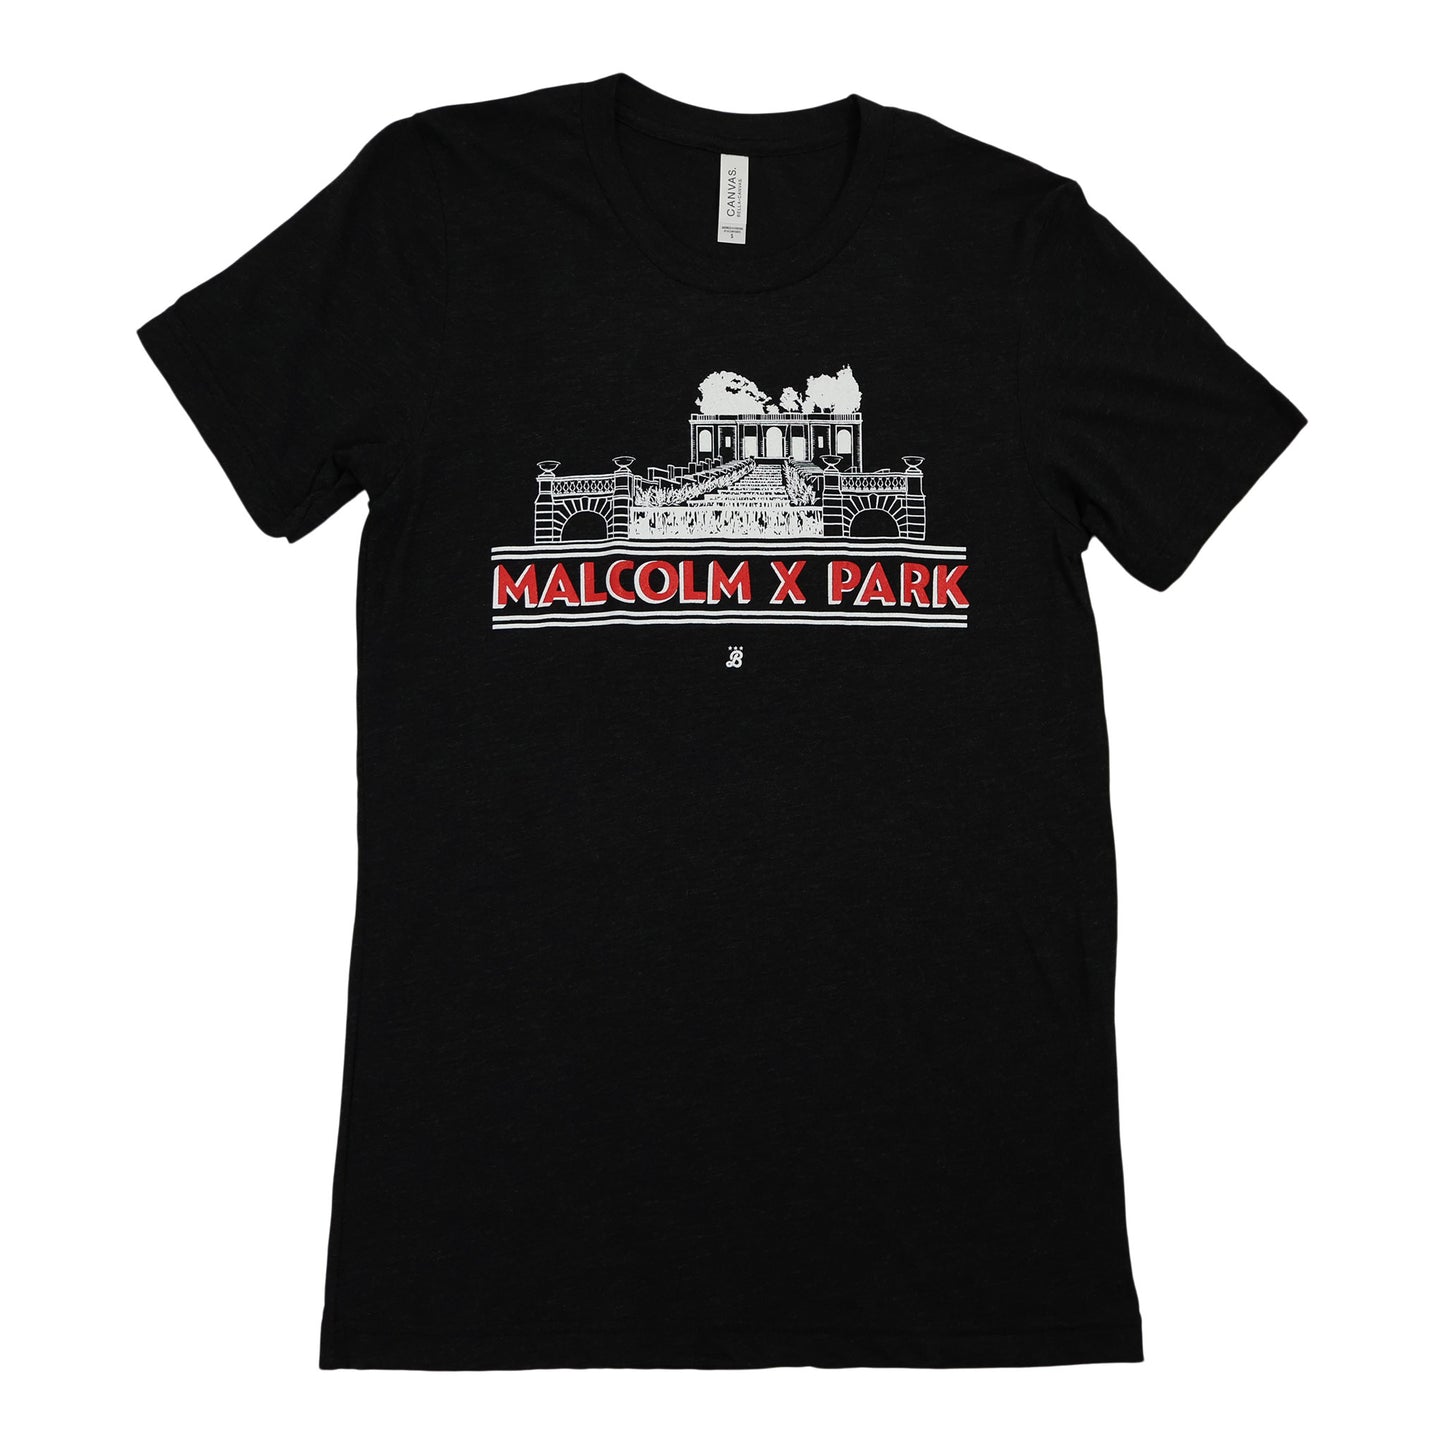 Unisex "Malcolm X Park" Charcoal Black Triblend shirt